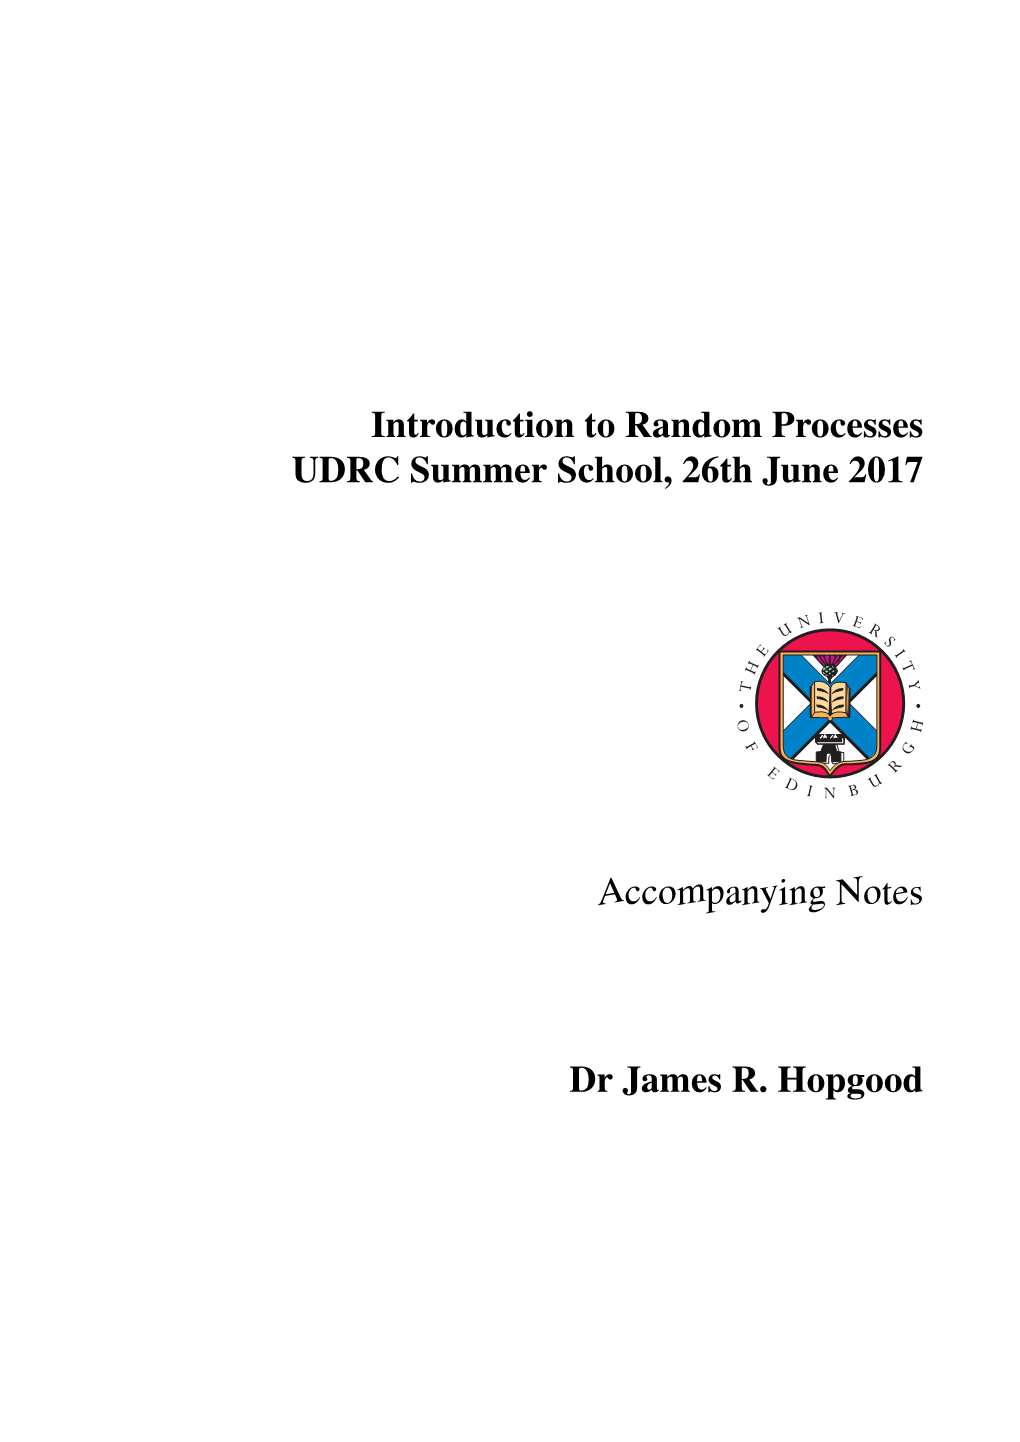 Introduction to Random Processes UDRC Summer School, 26Th June 2017